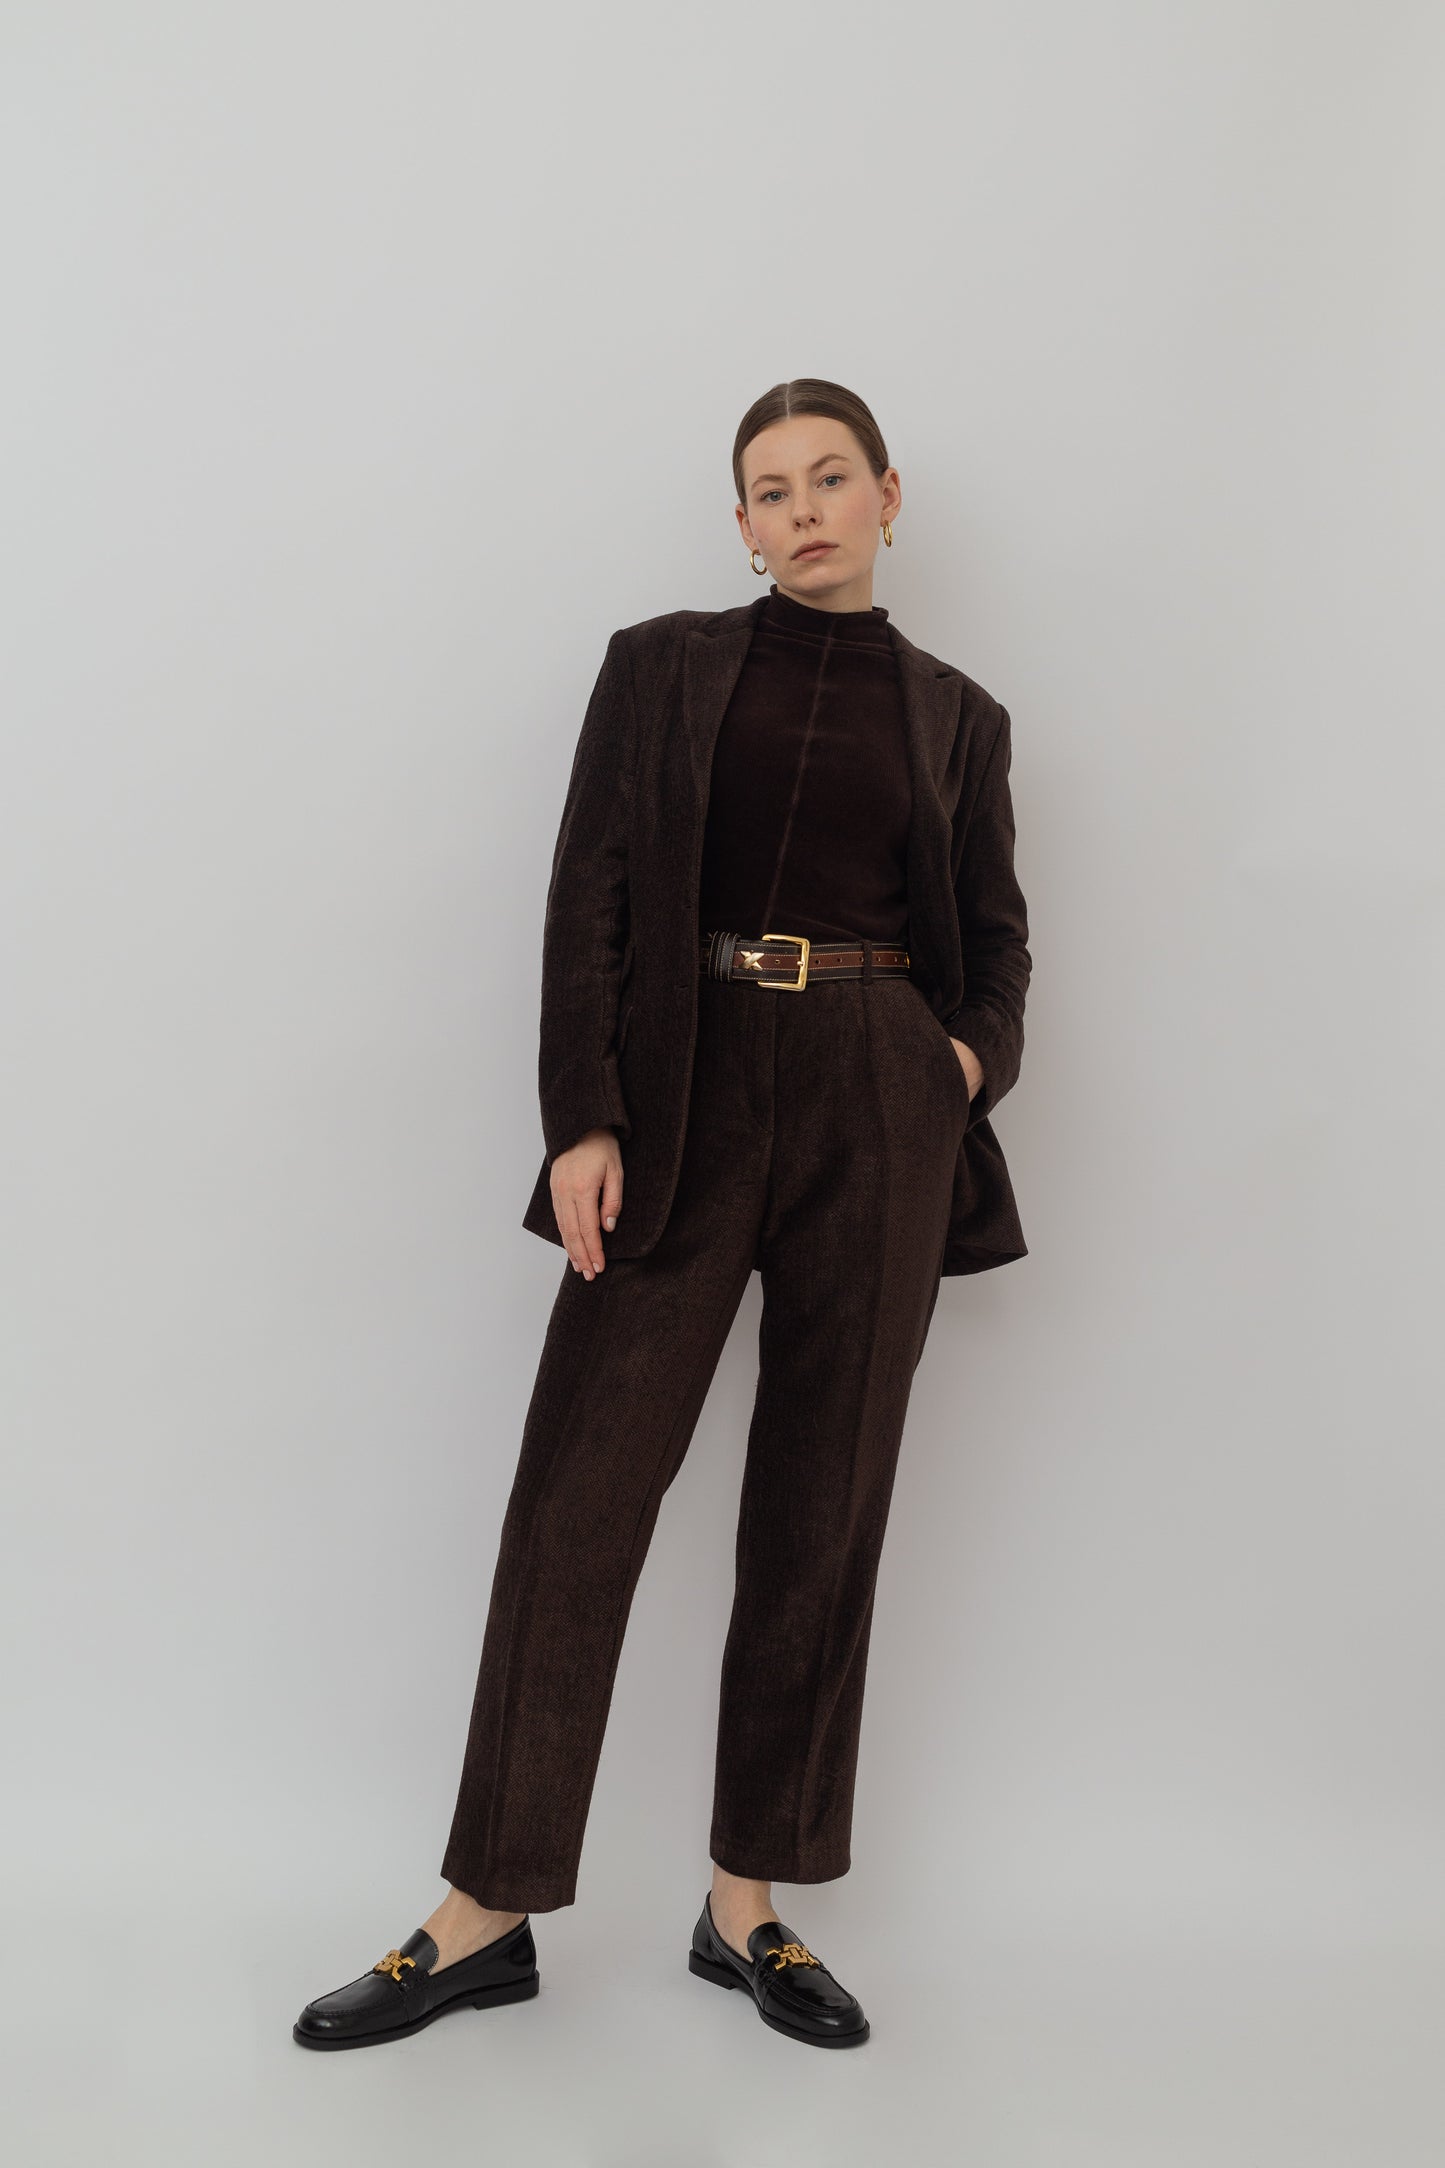 Velvet suit by Madeleine